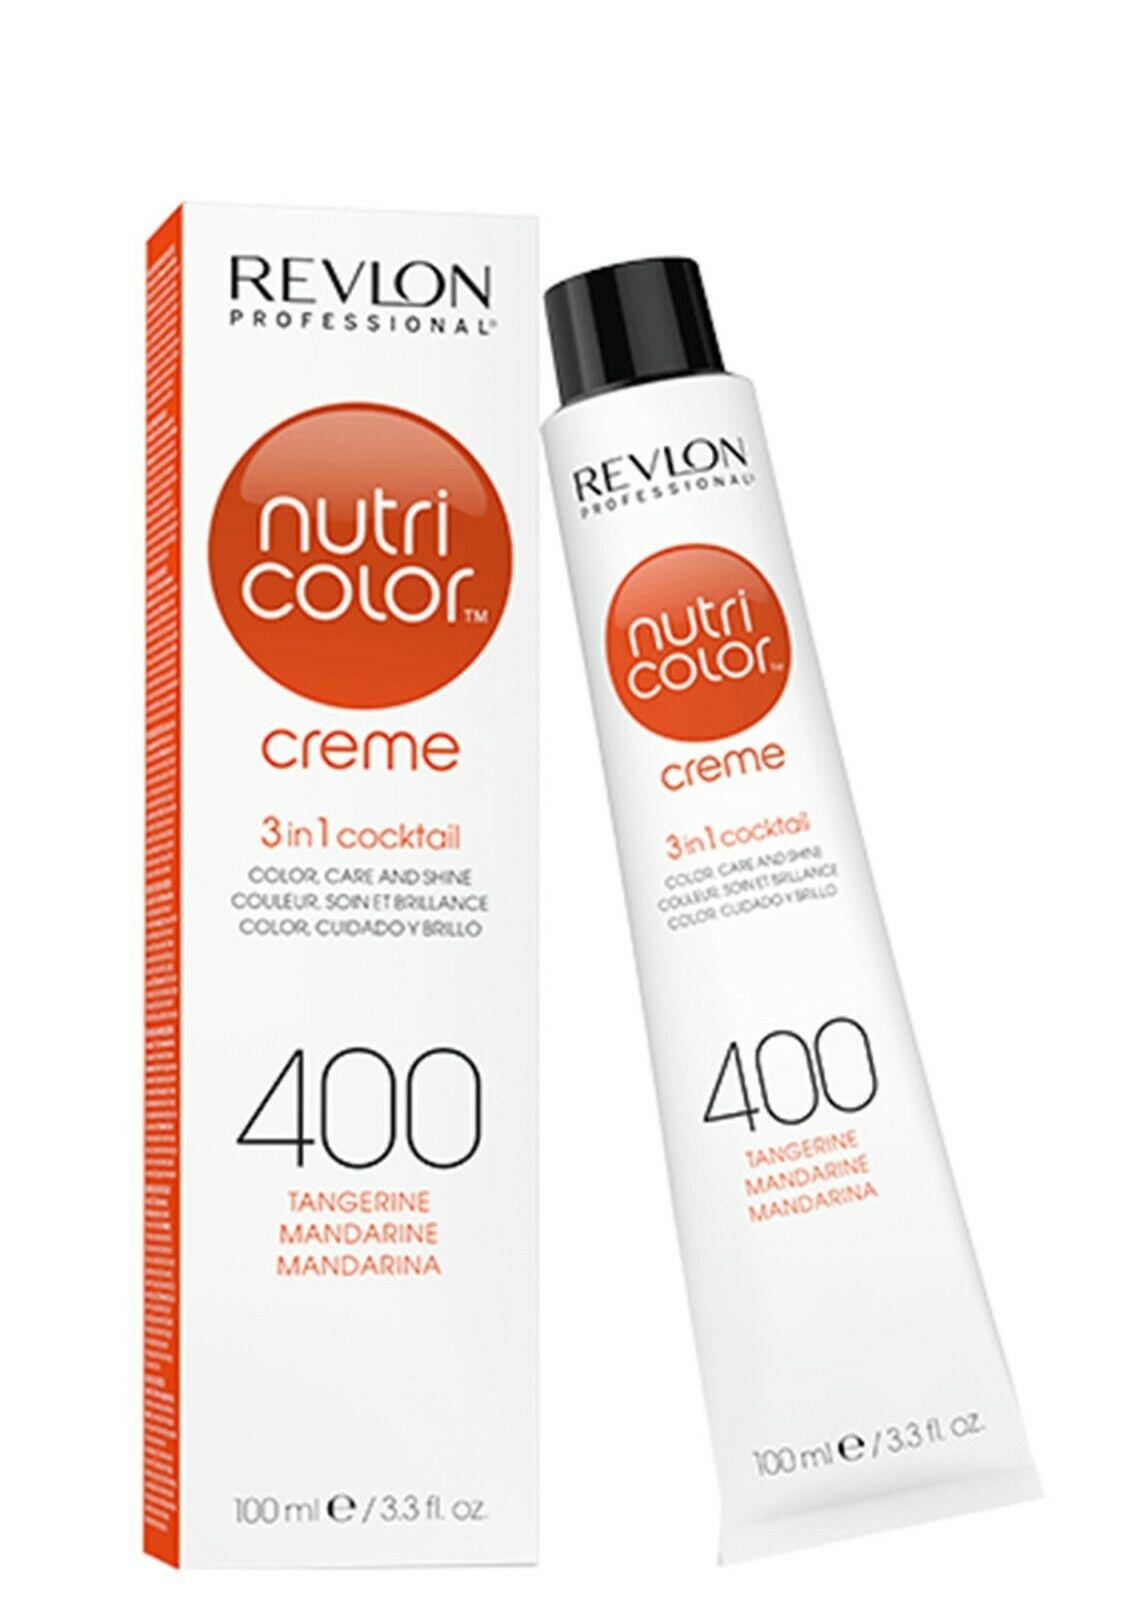 iaahhaircare,Revlon Professional Nutri Color Creme 3in1 #400 100ml,Hair Colouring,Revlon